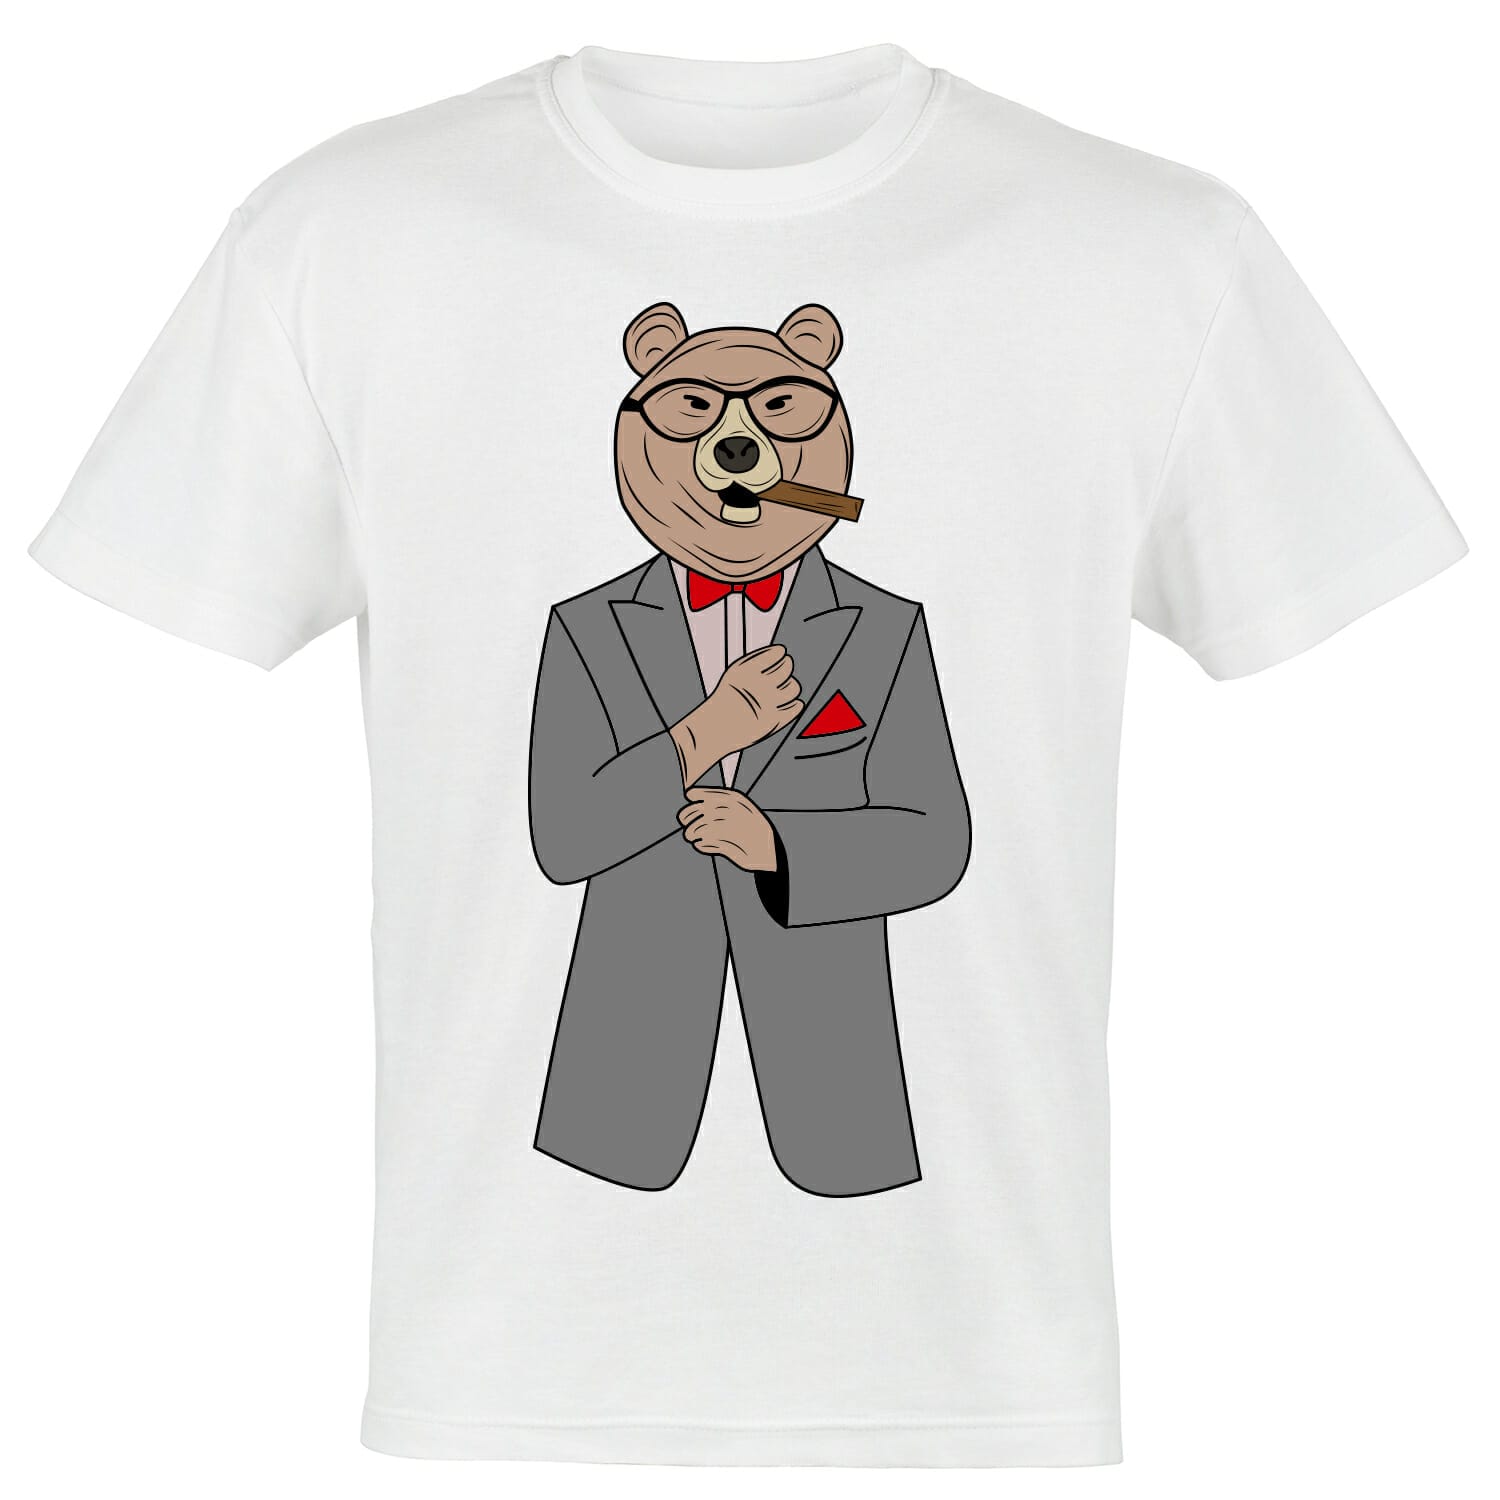 Bear wearing a suit tshirt design